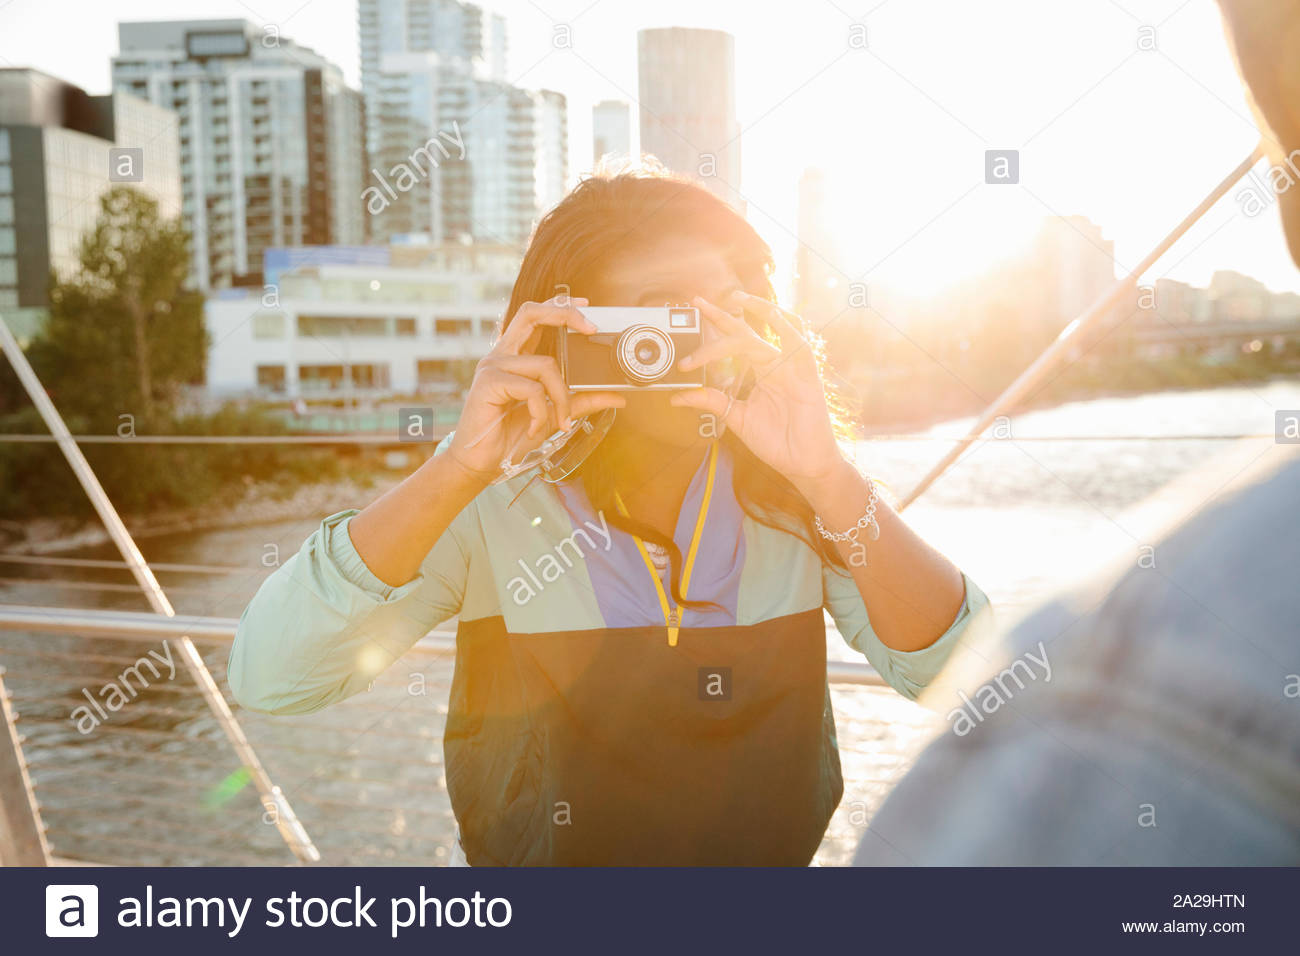 Young woman using retro camera on sunny, urban bridge Stock Photo